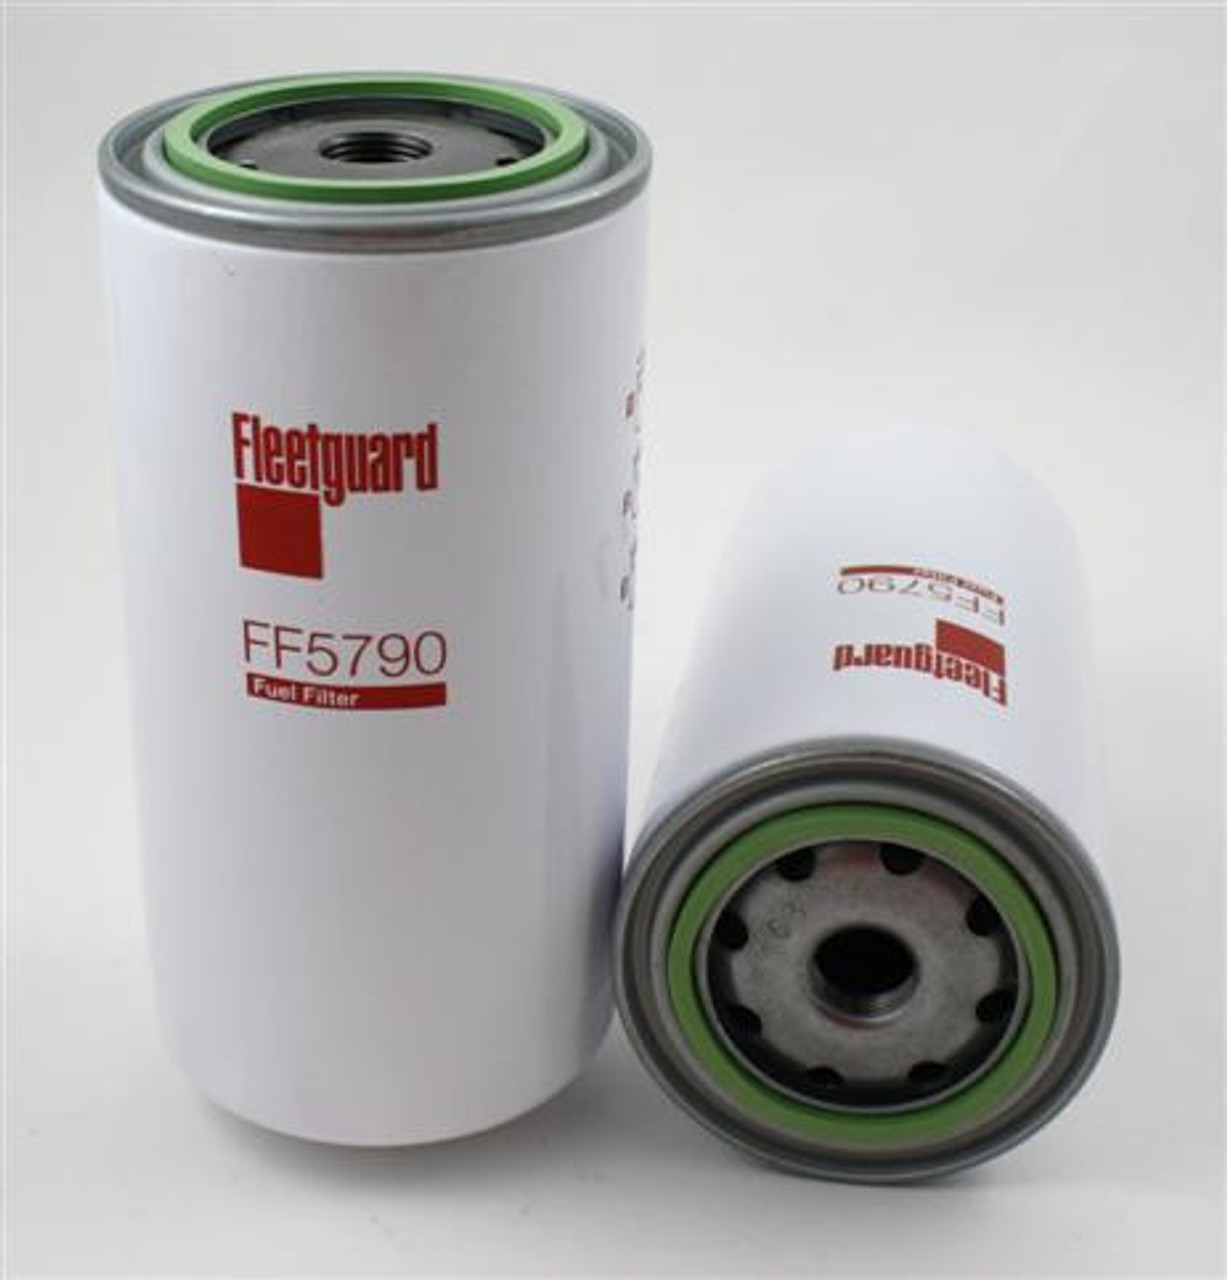 FF5790: Fleetguard Fuel Filter